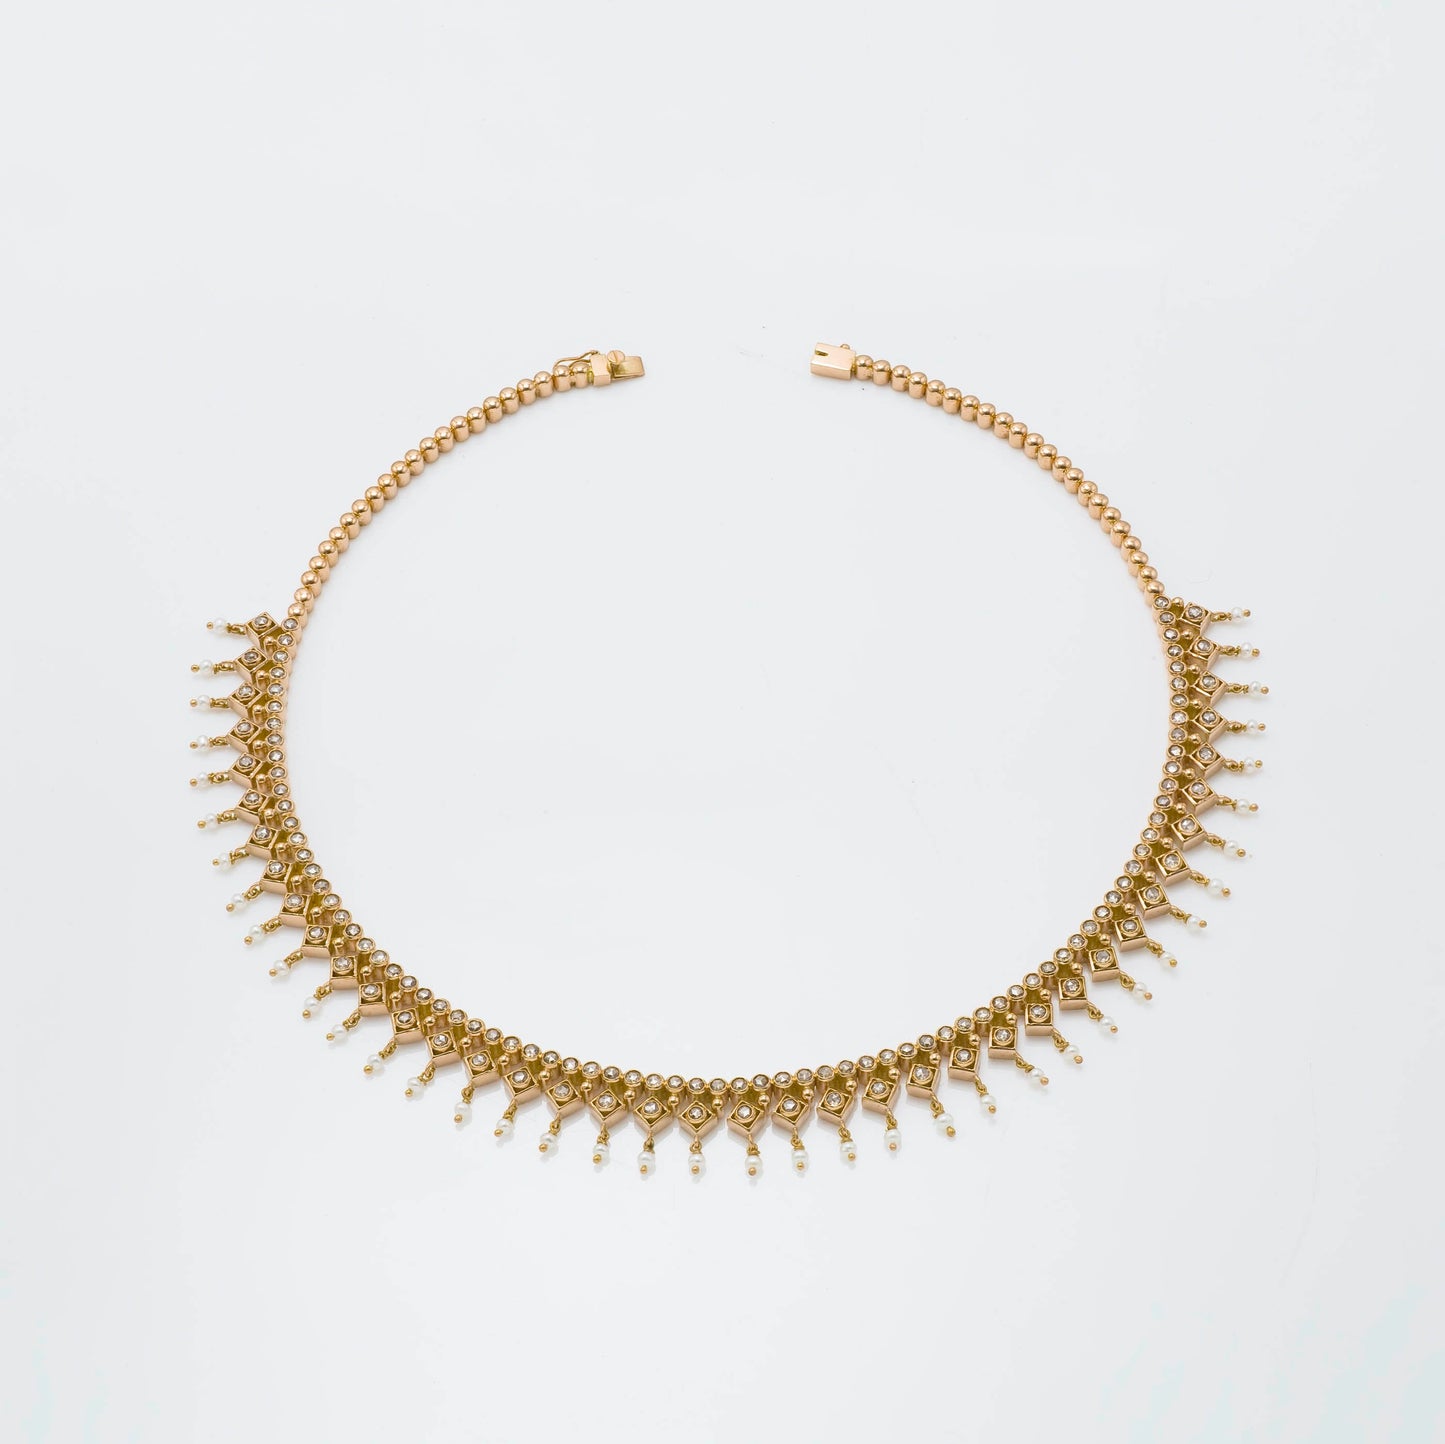 The Janjhuti Gold, Diamond and Pearl Necklace by Rasvihar